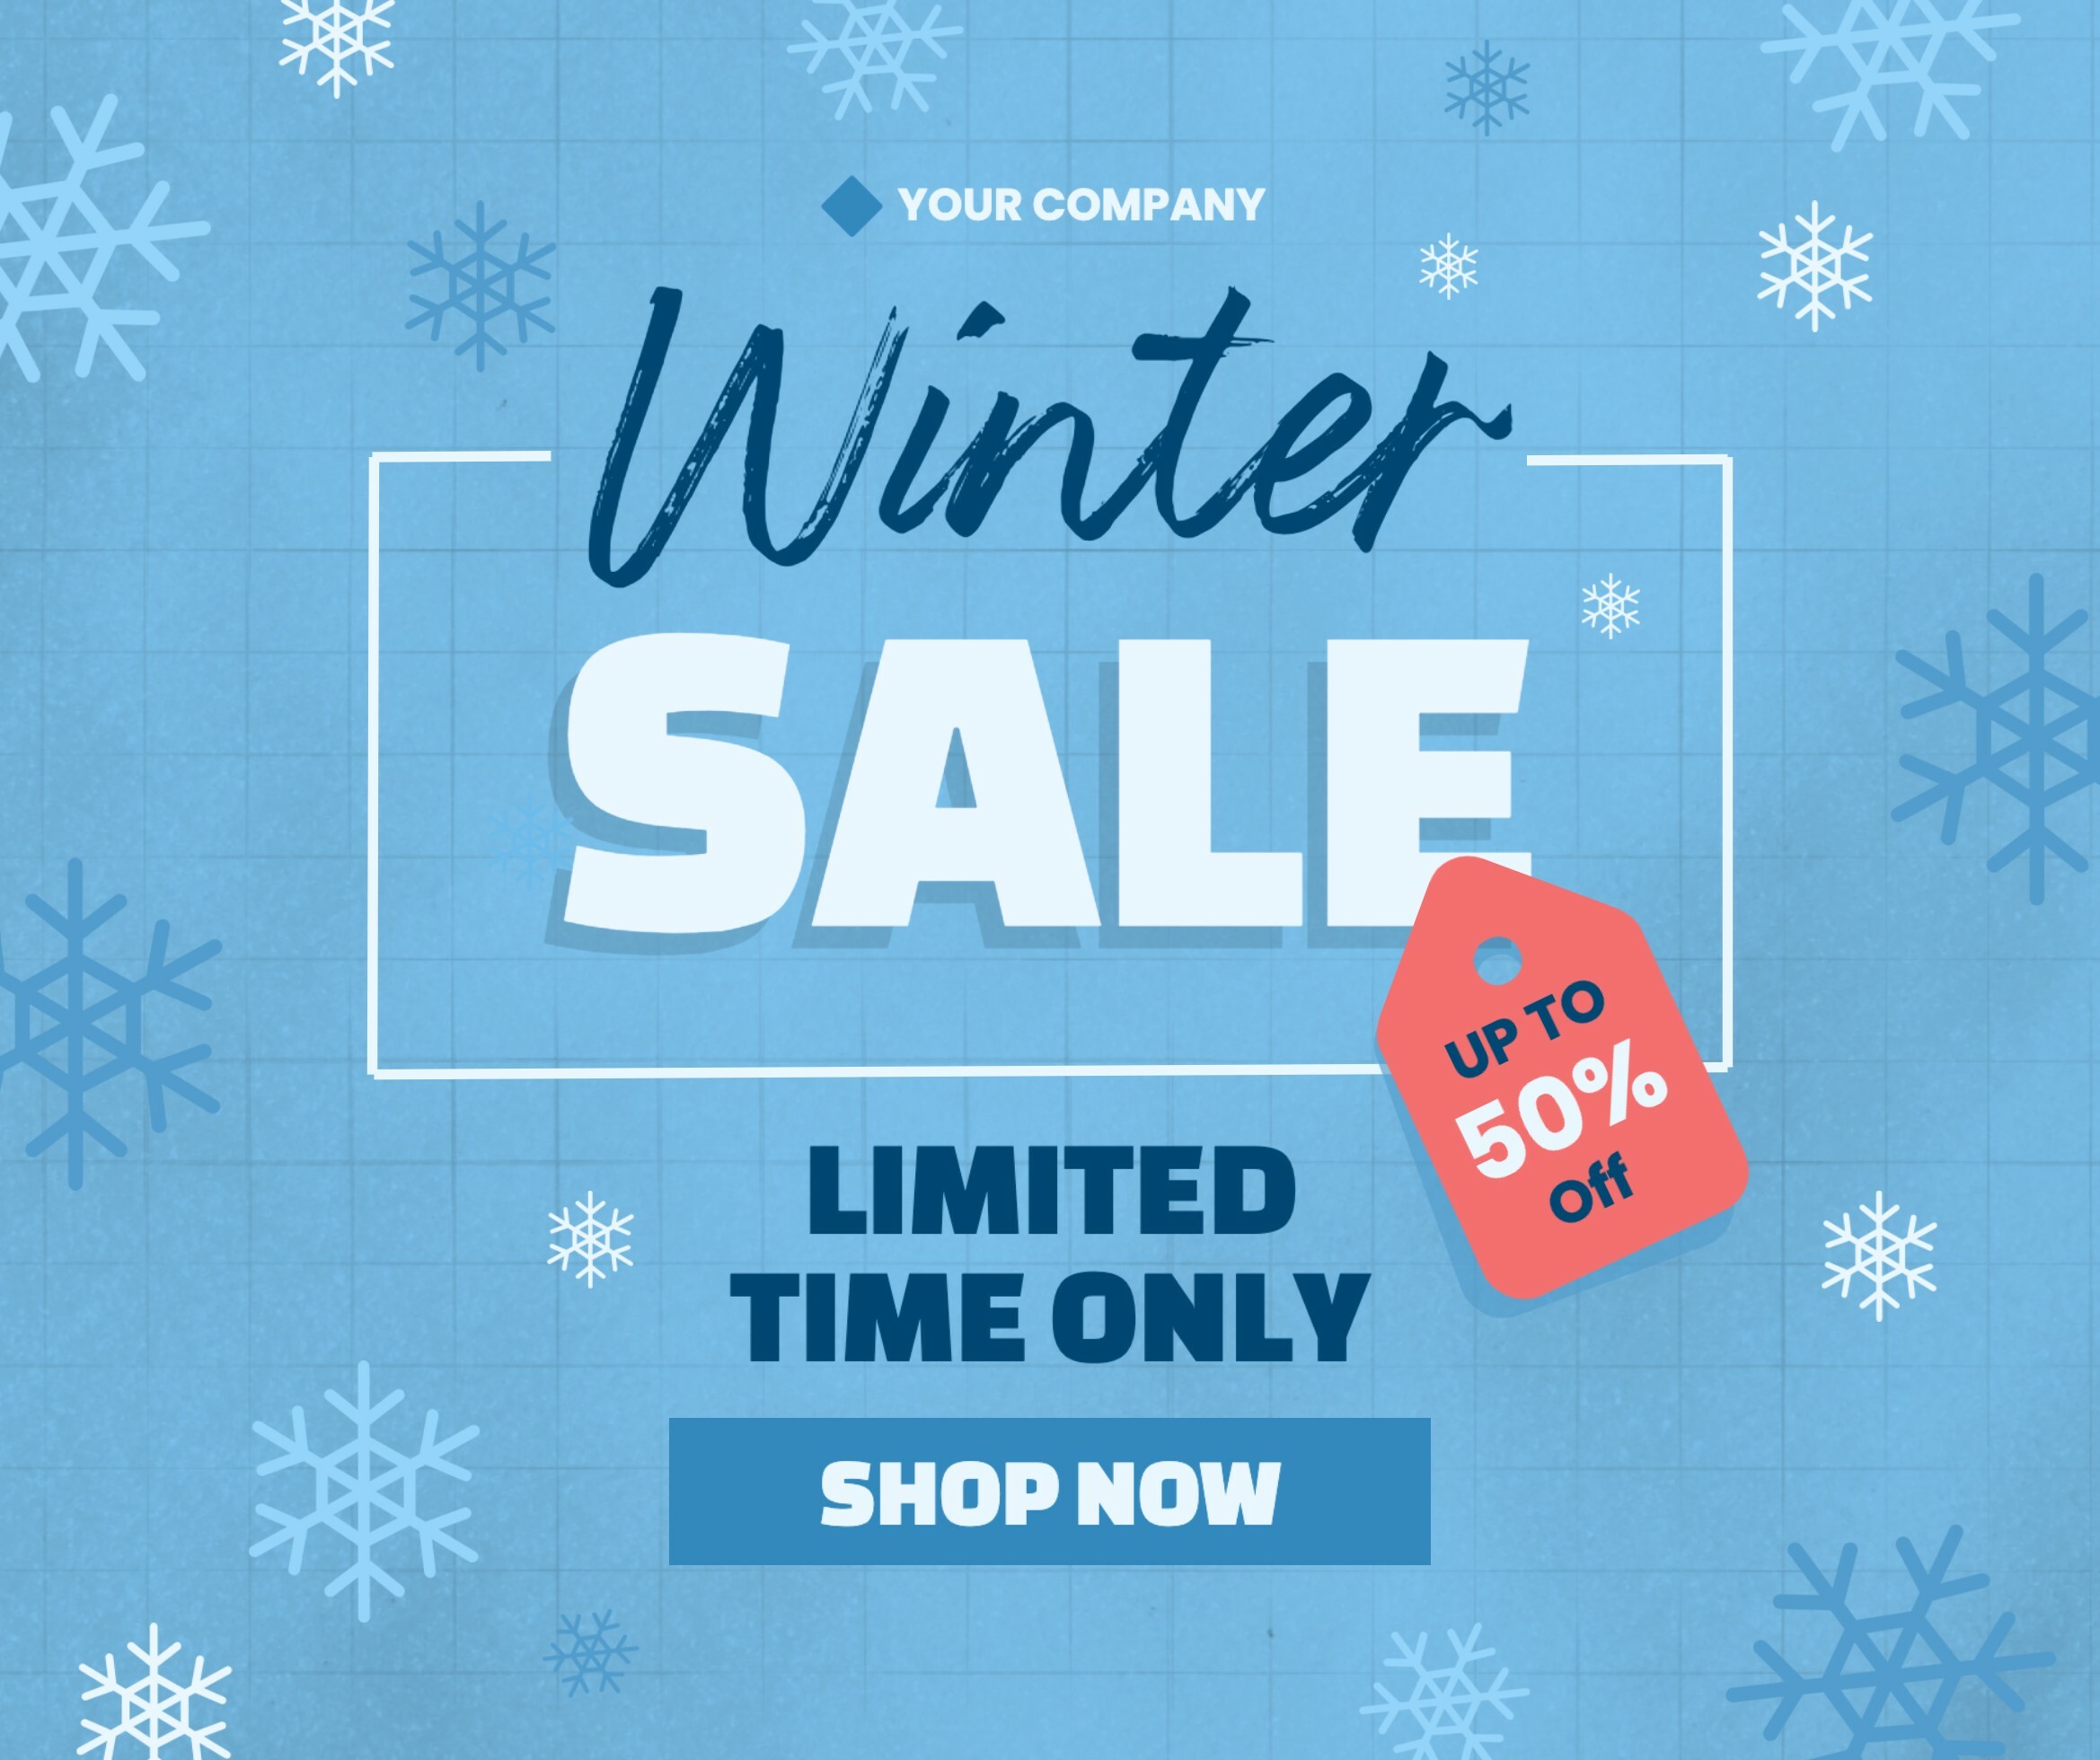 Seasonal Winter Sale Facebook Post